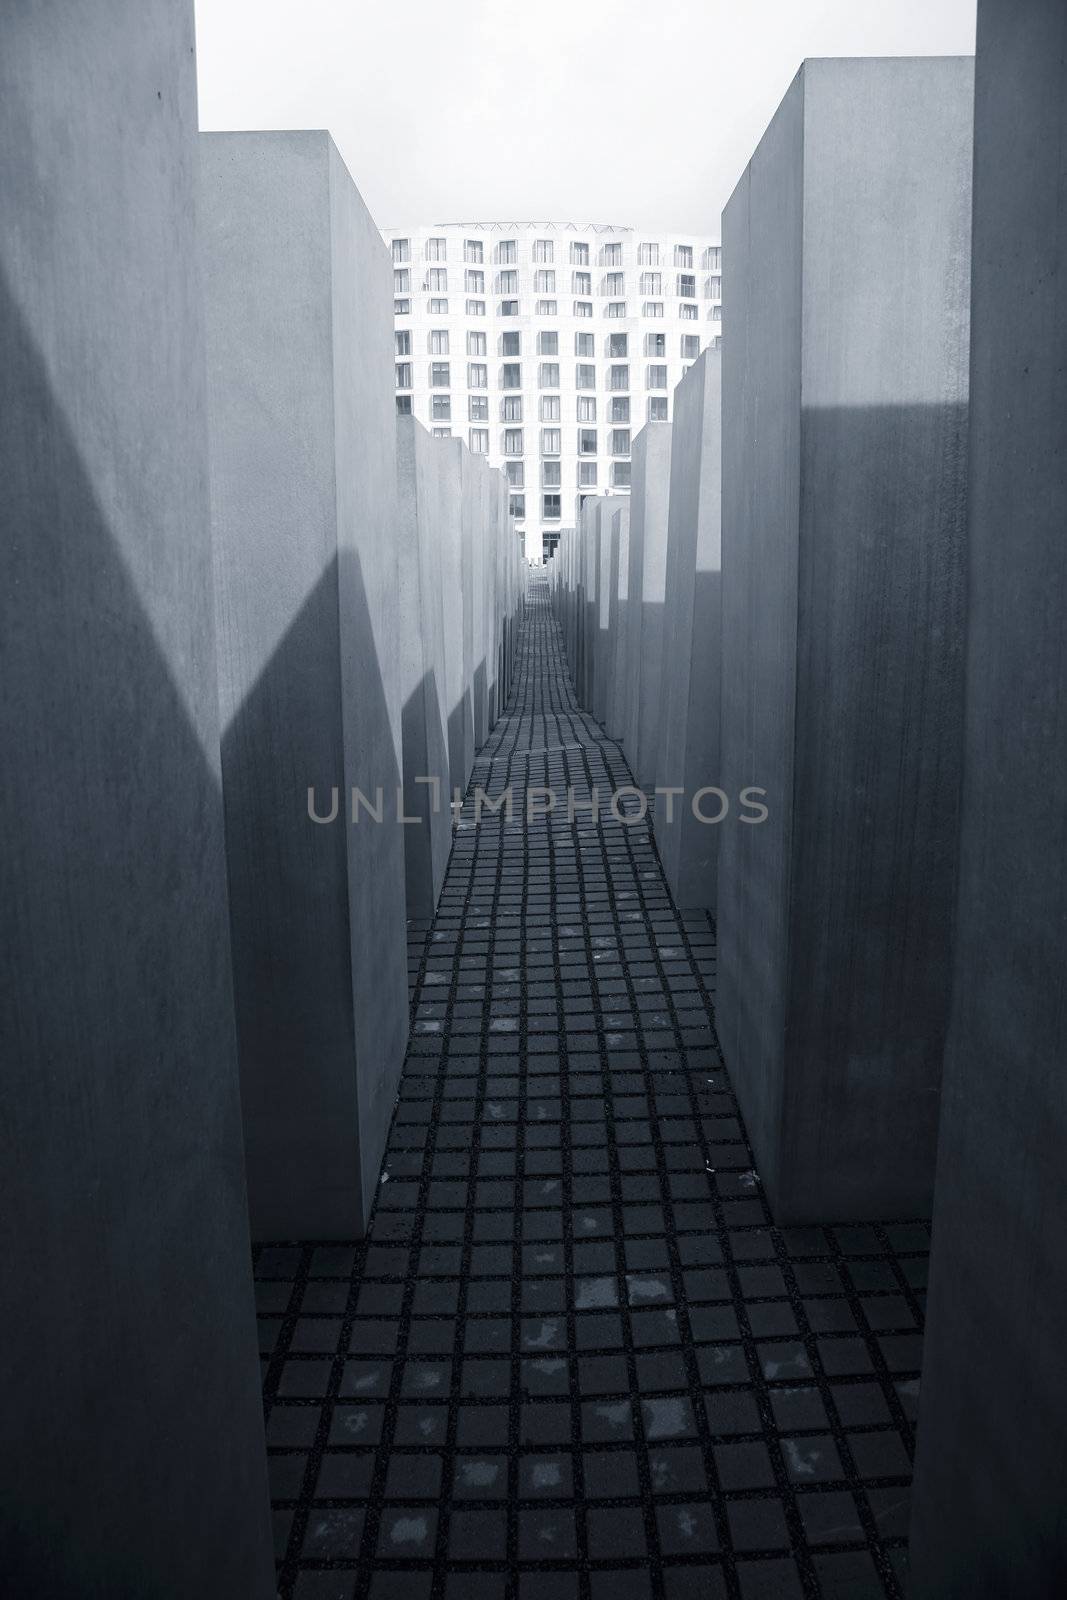 Holocaust Memorial Berlin by ABCDK